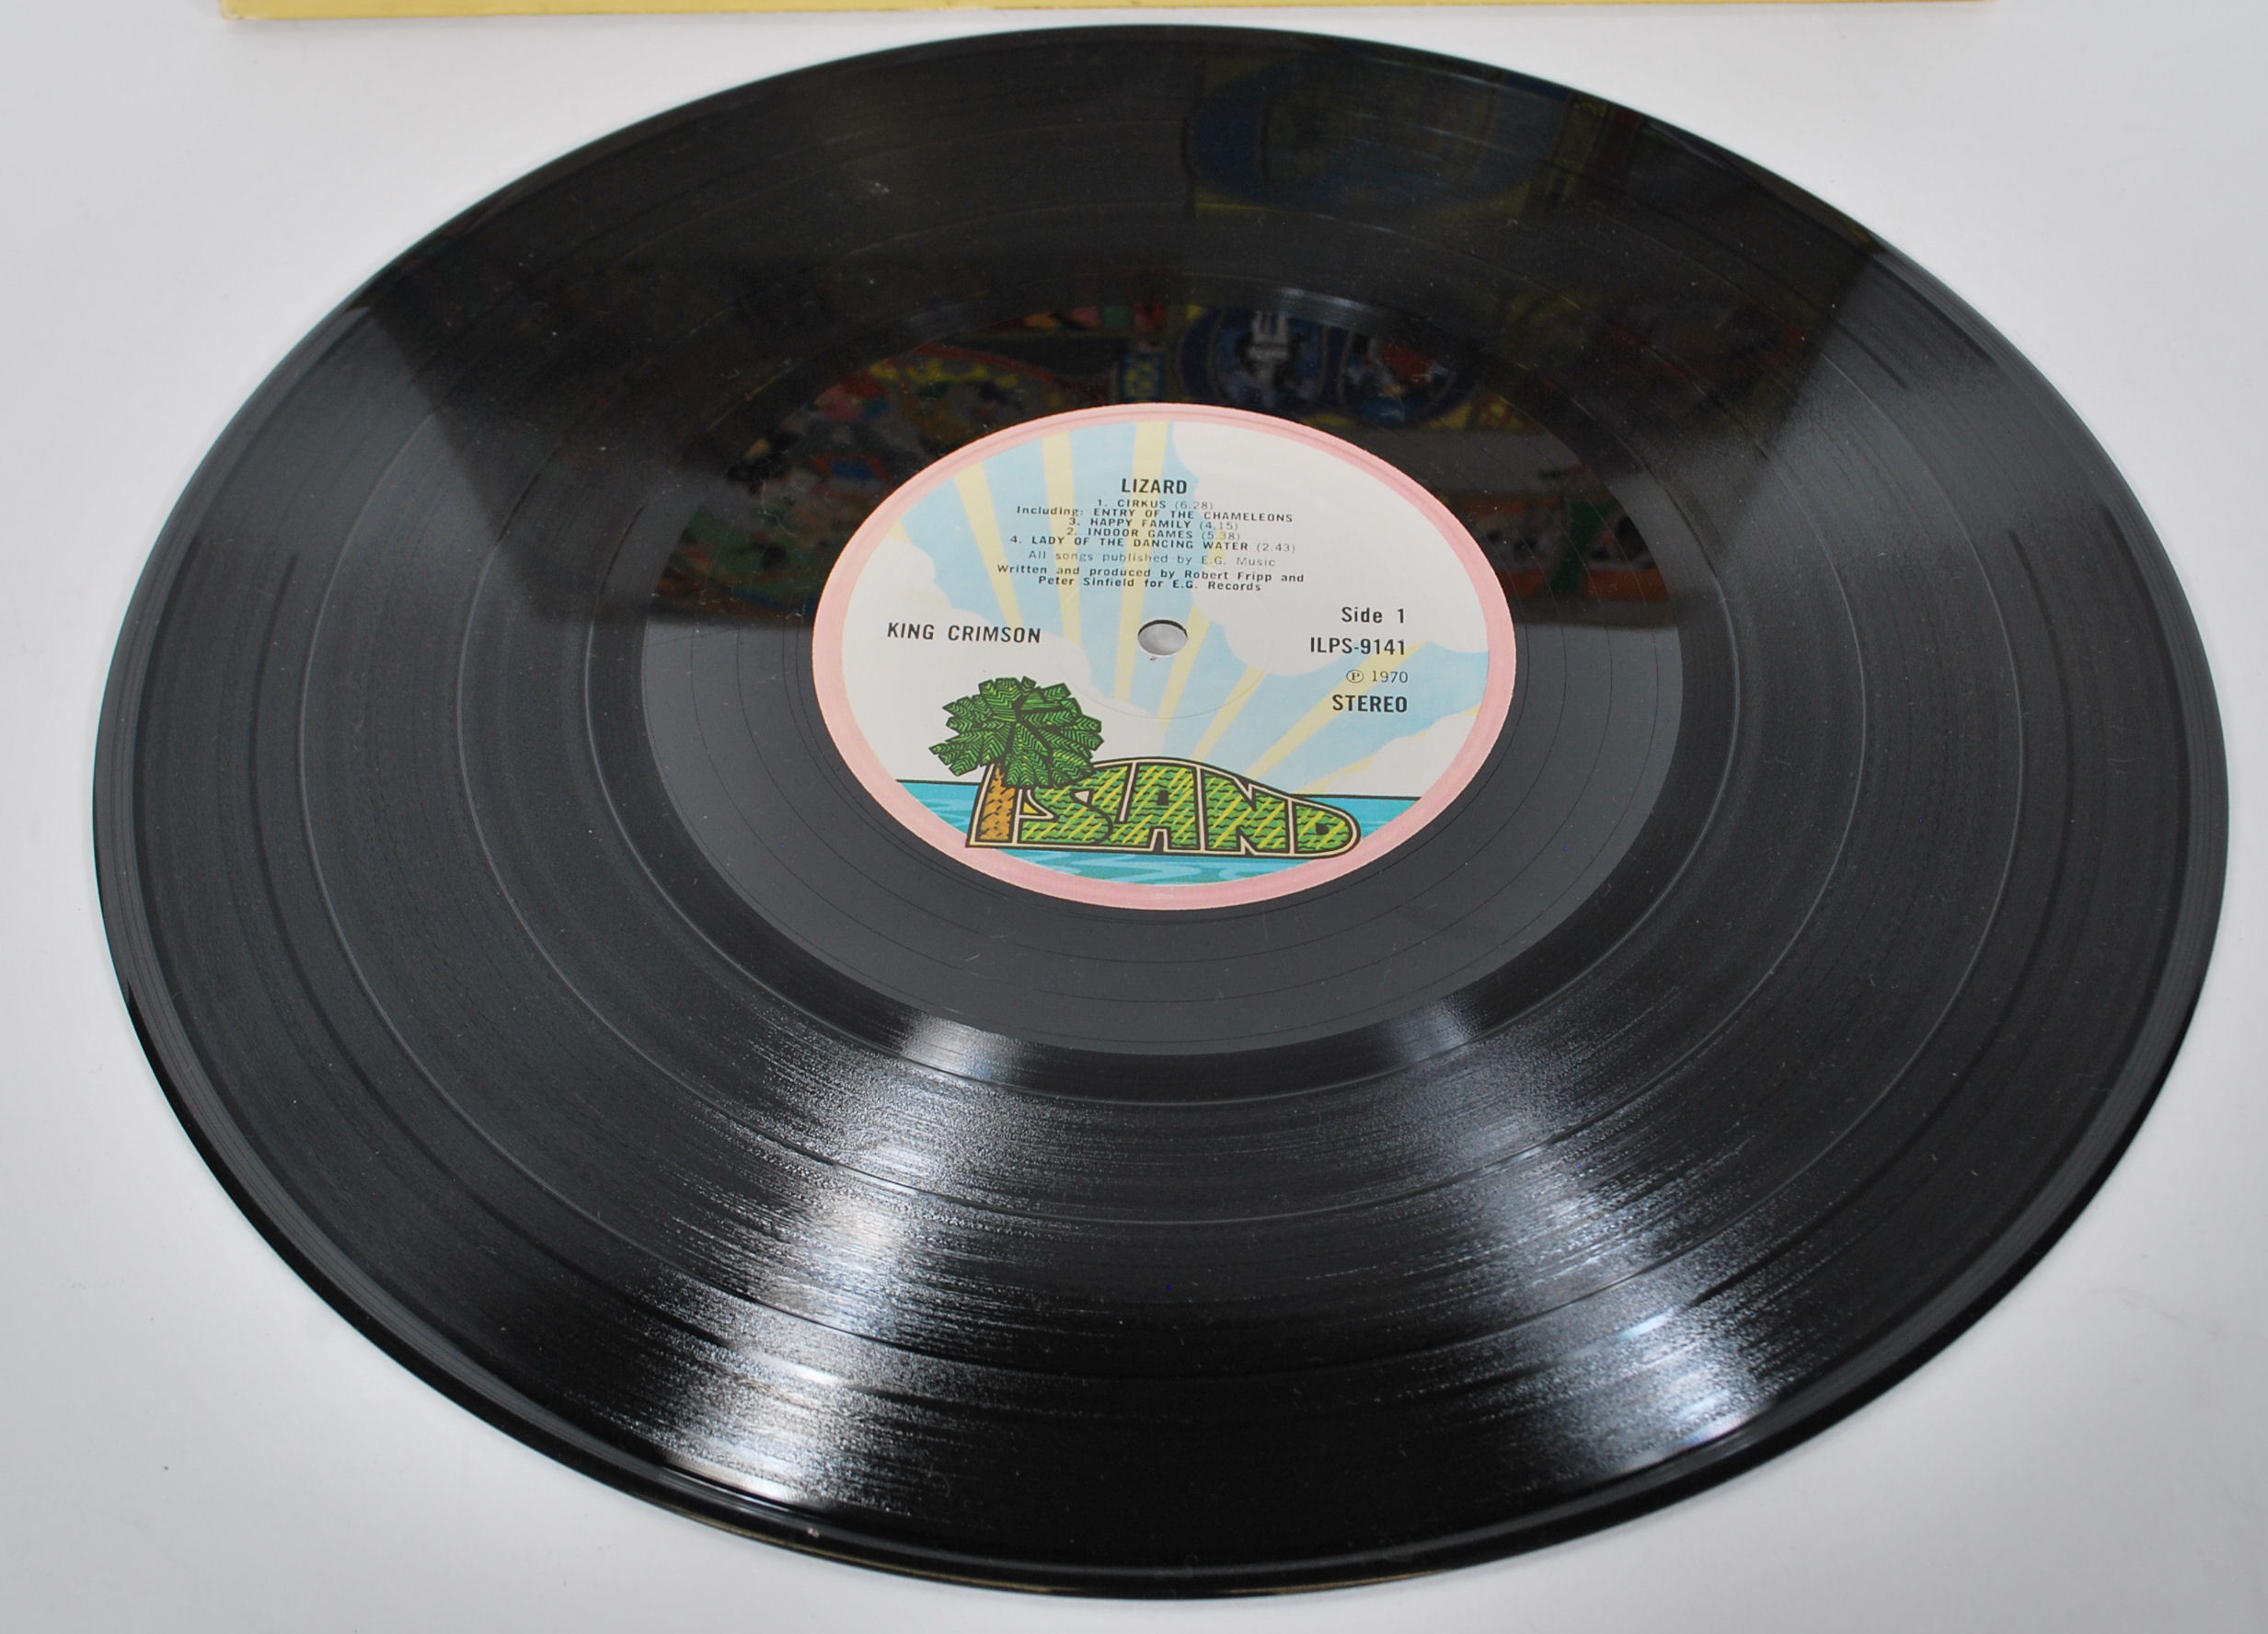 Vinyl long play LP record album by King Crimson – Lizard – Original Island 1st U.K. Press – Stereo – - Image 4 of 5